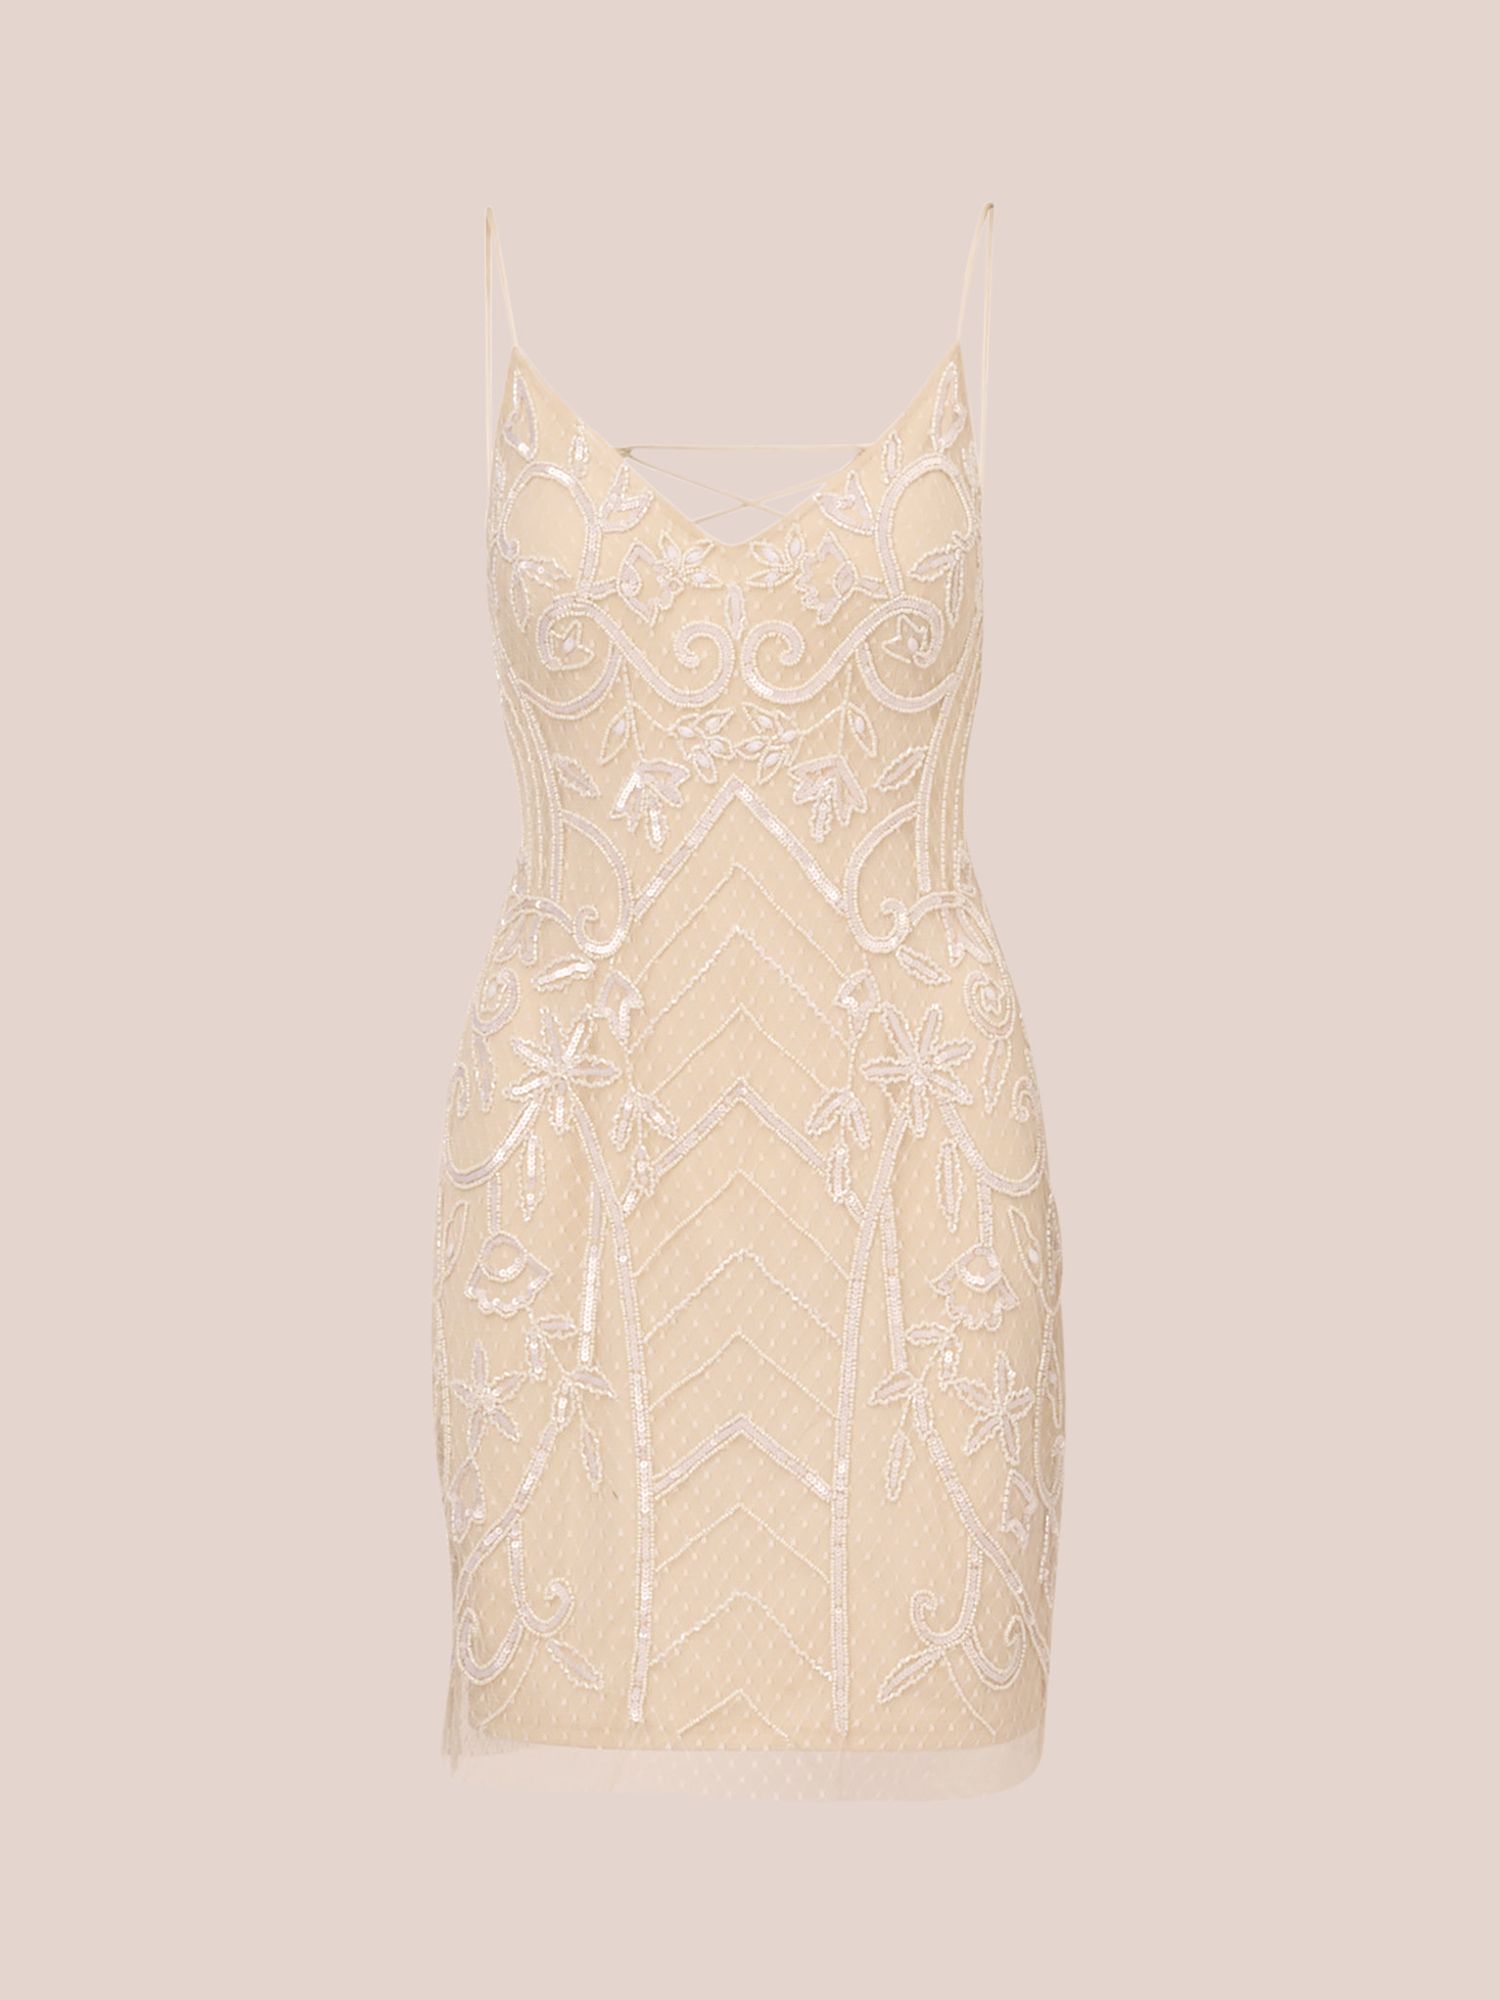 Adrianna Papell Beaded Mini Dress, Ivory/Pearl, 6